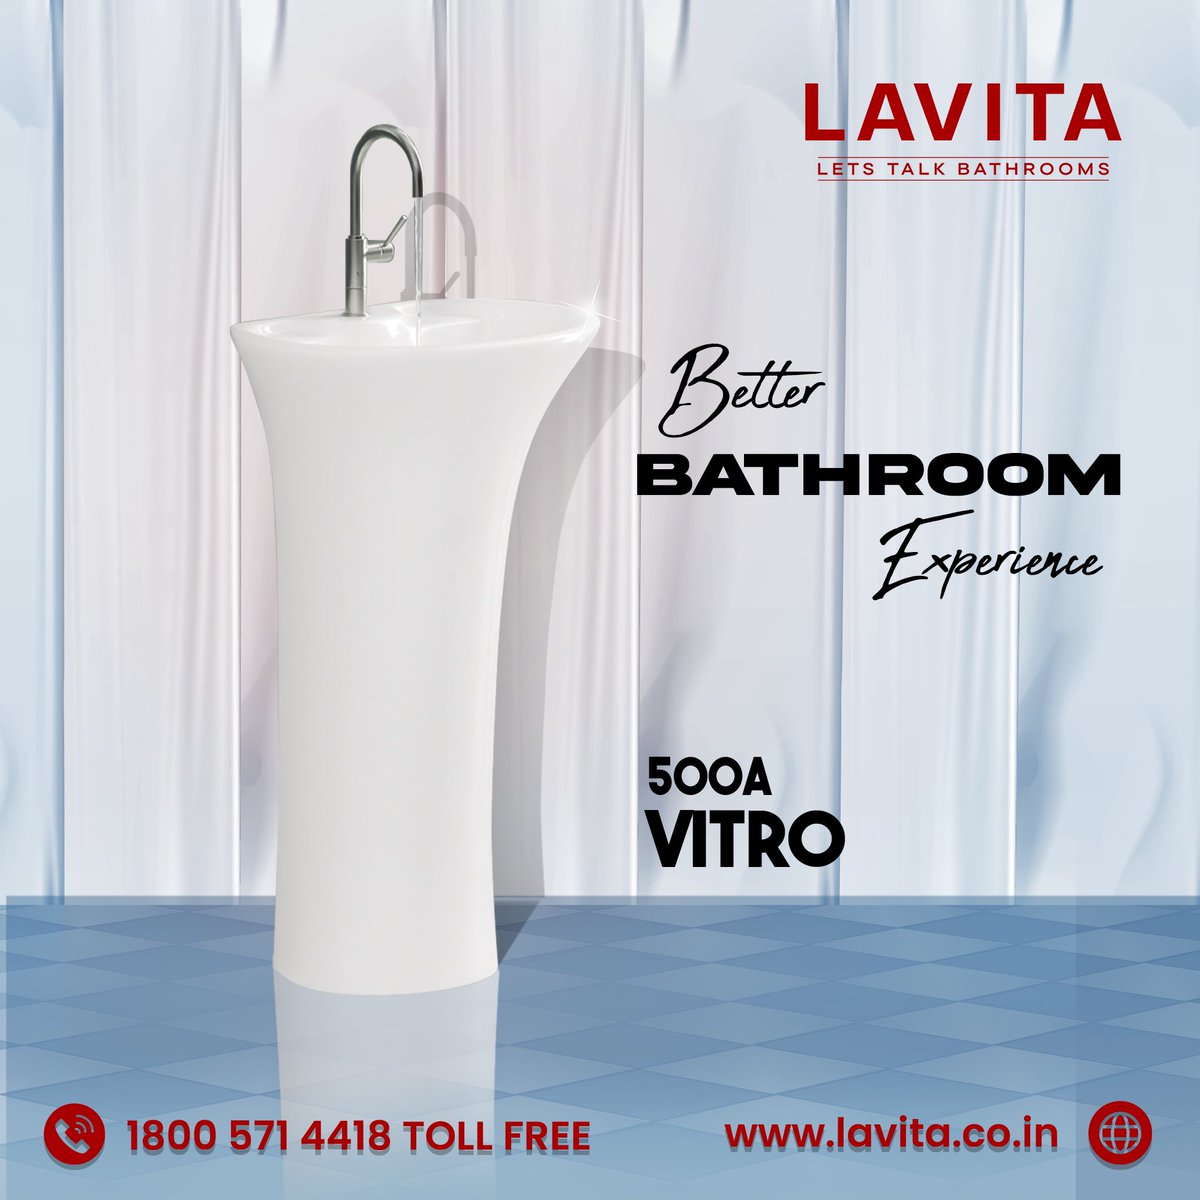 #lavita #lavitabathware #bathroomdesign #15yearsguarantee #classy #dininghall #premiumsanitaryware #onepiecebasin #bathroomsanitaryware #bathroomdecor